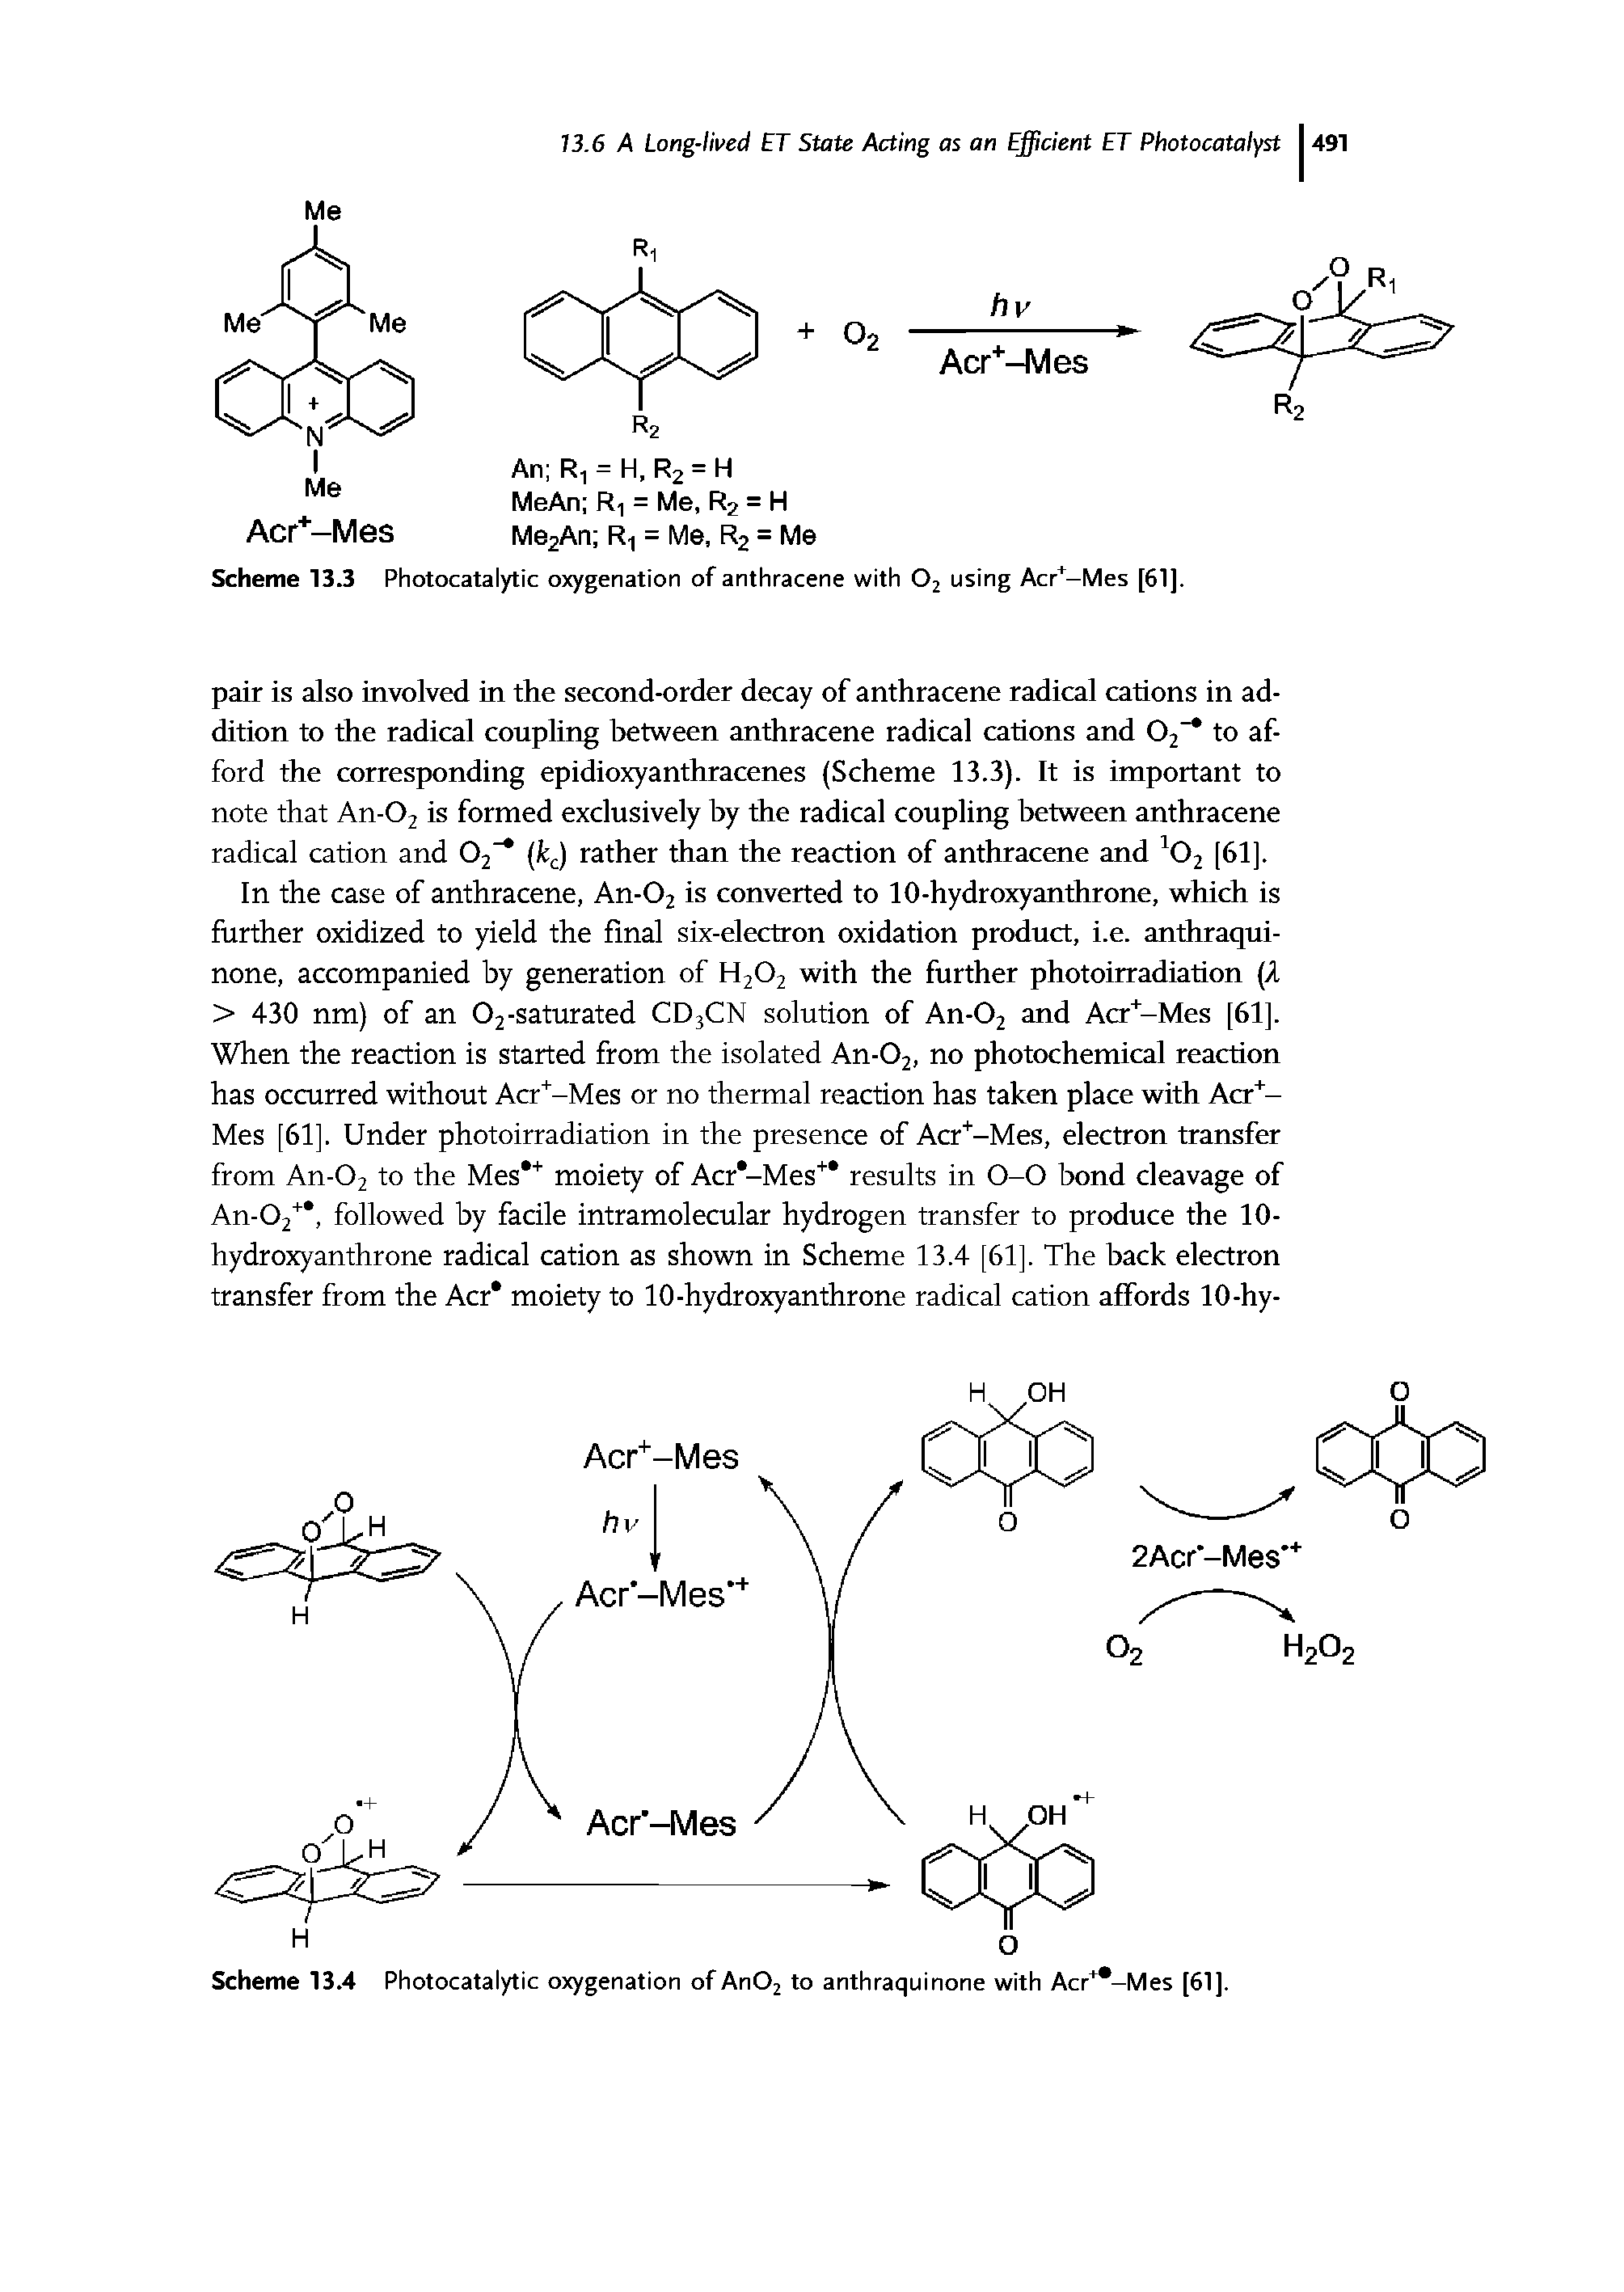 Scheme 13.3 Photocatalytic oxygenation of anthracene with Oz using Acr+-Mes [61].